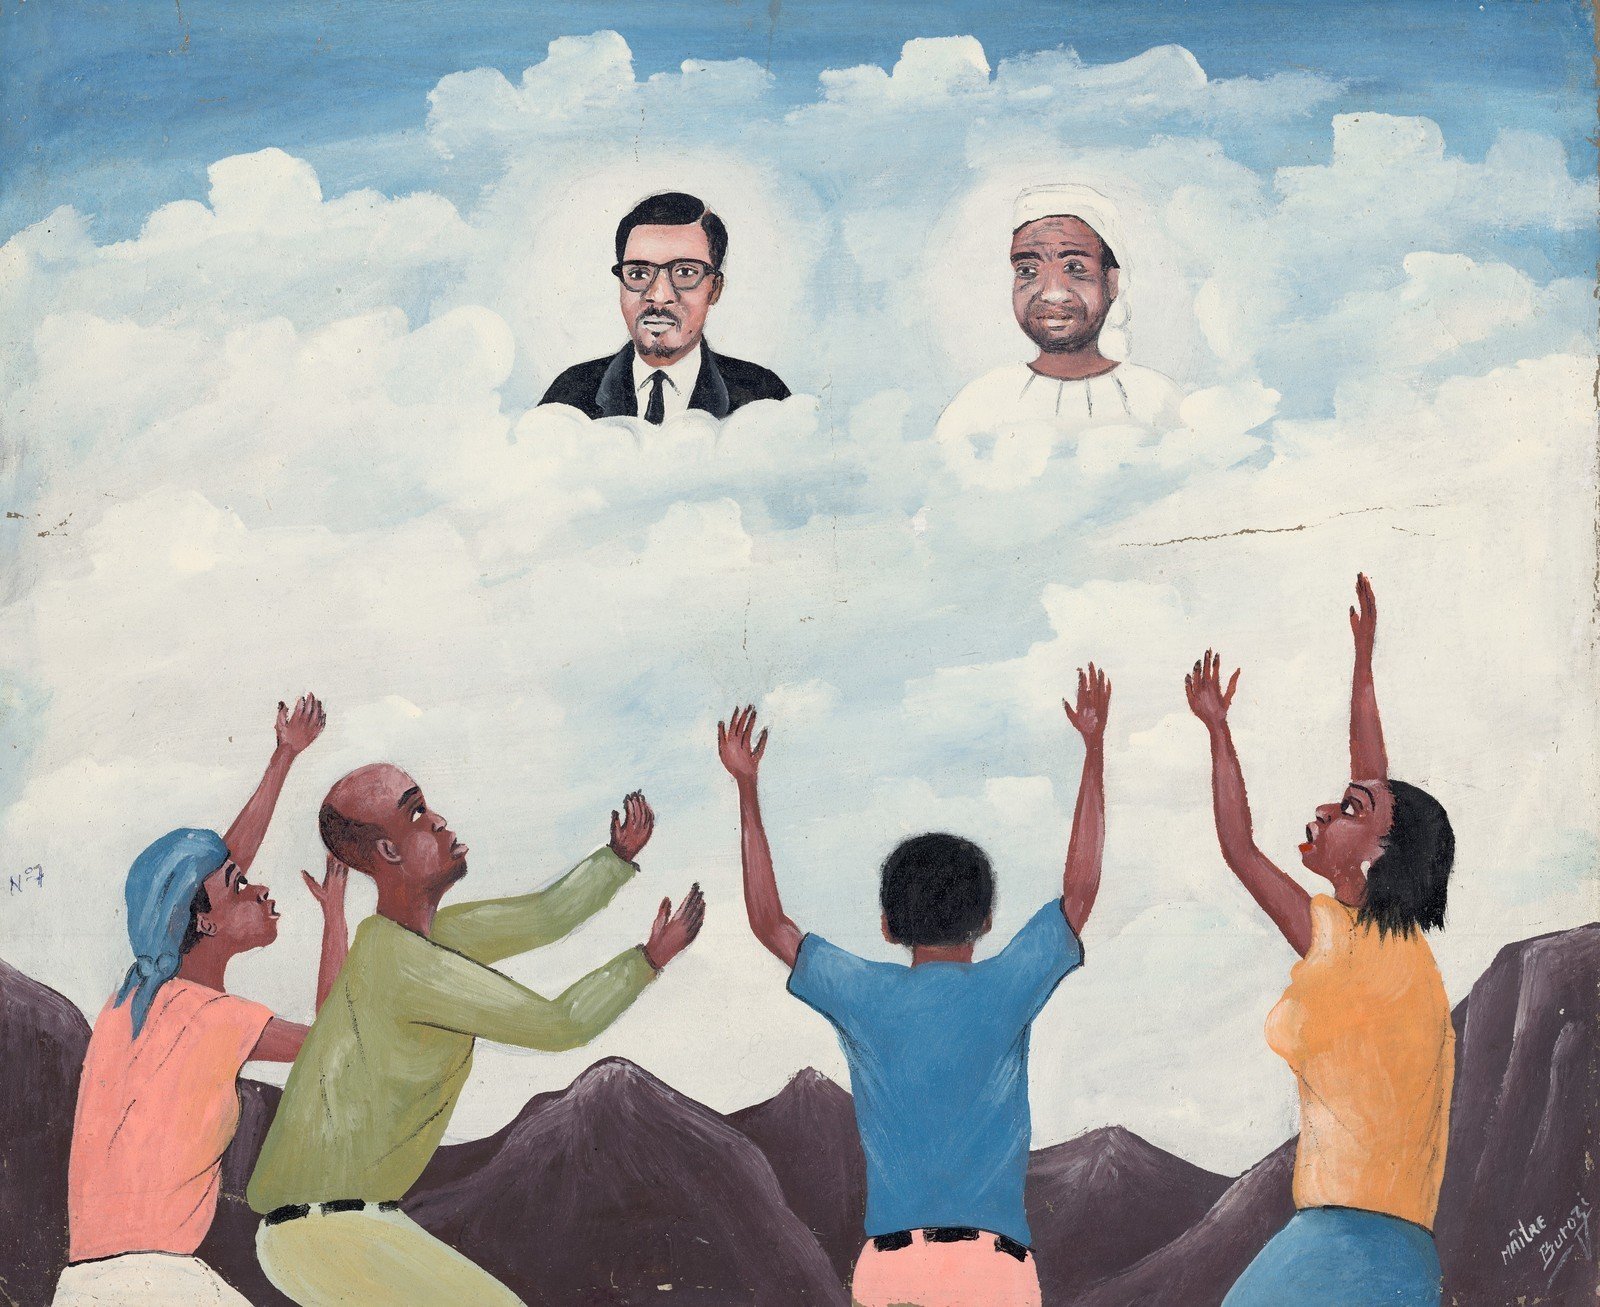 Burozi. Lumumba and Kimbangu in the clouds. Lubumbashi, Haut-Katanga, DRC, 1997. Oil on canvas. RMCA Collection, Tervuren.